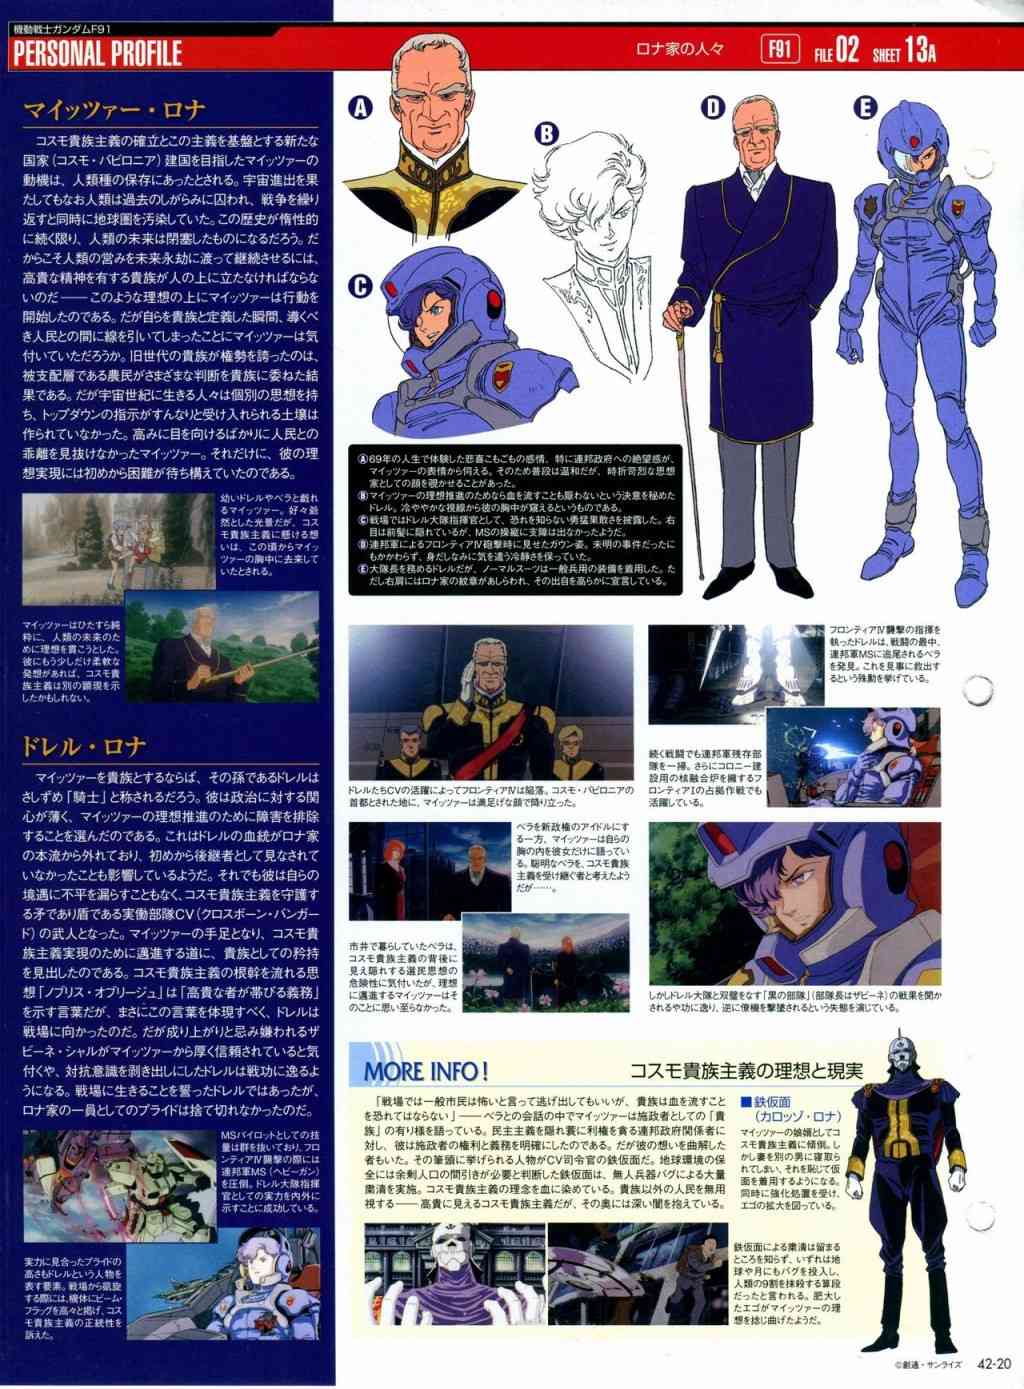 Gundam Mobile Suit Bible - 75卷 - 7